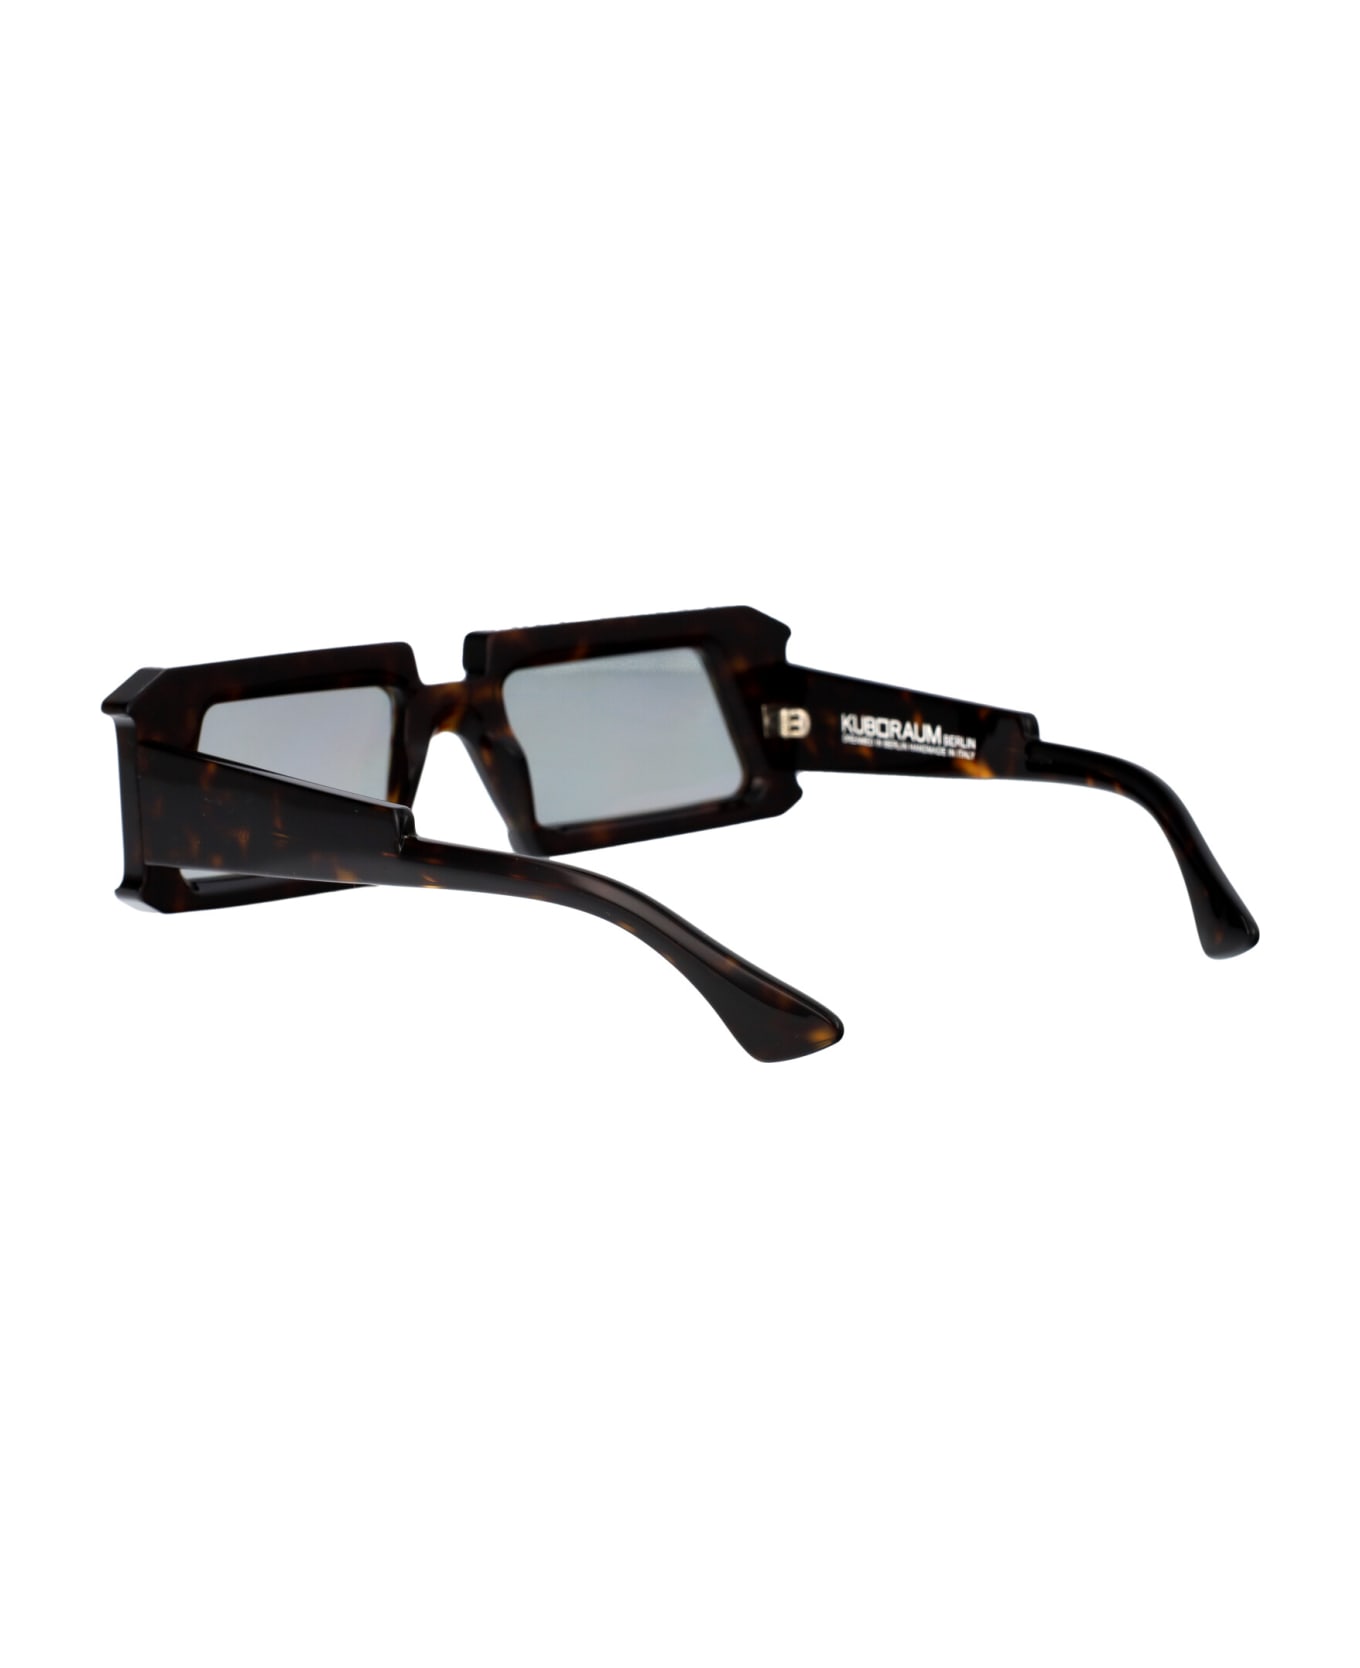 Kuboraum Maske X20 Sunglasses - TS CT 2grey1* サングラス